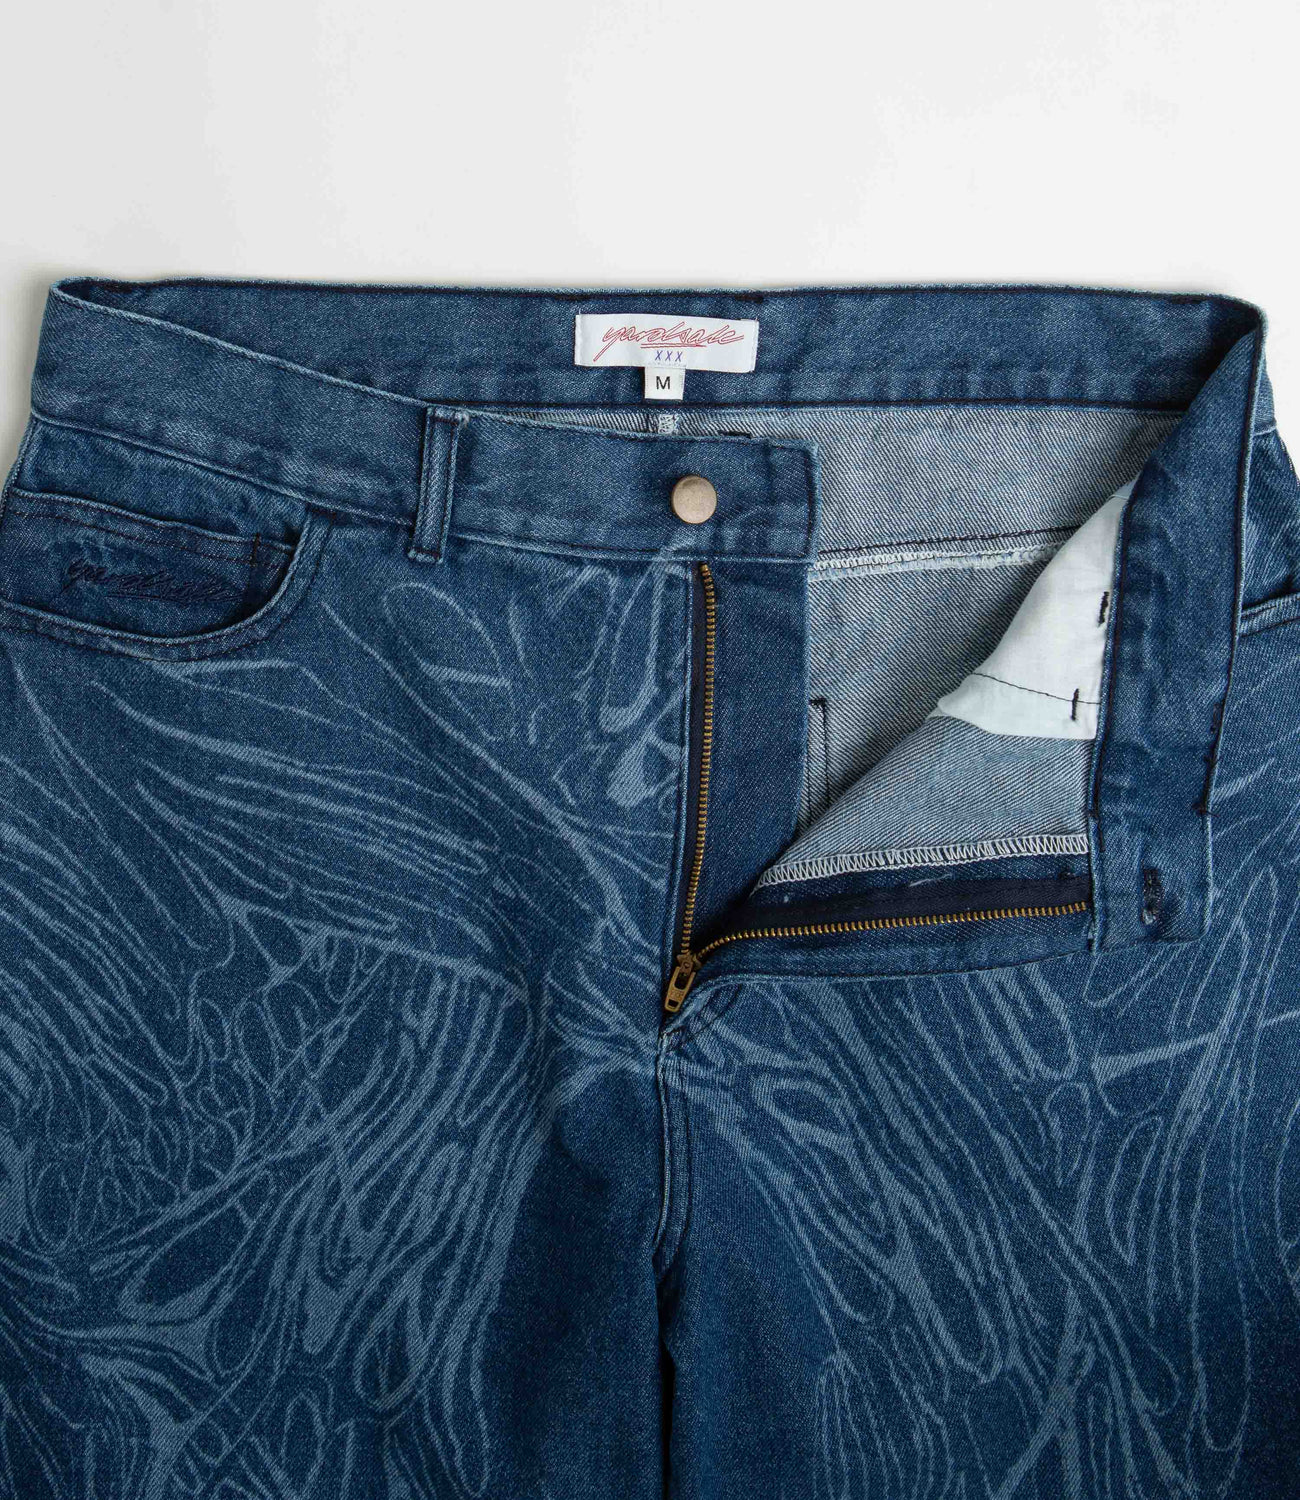 Yardsale Jeans & Pant Guide. 